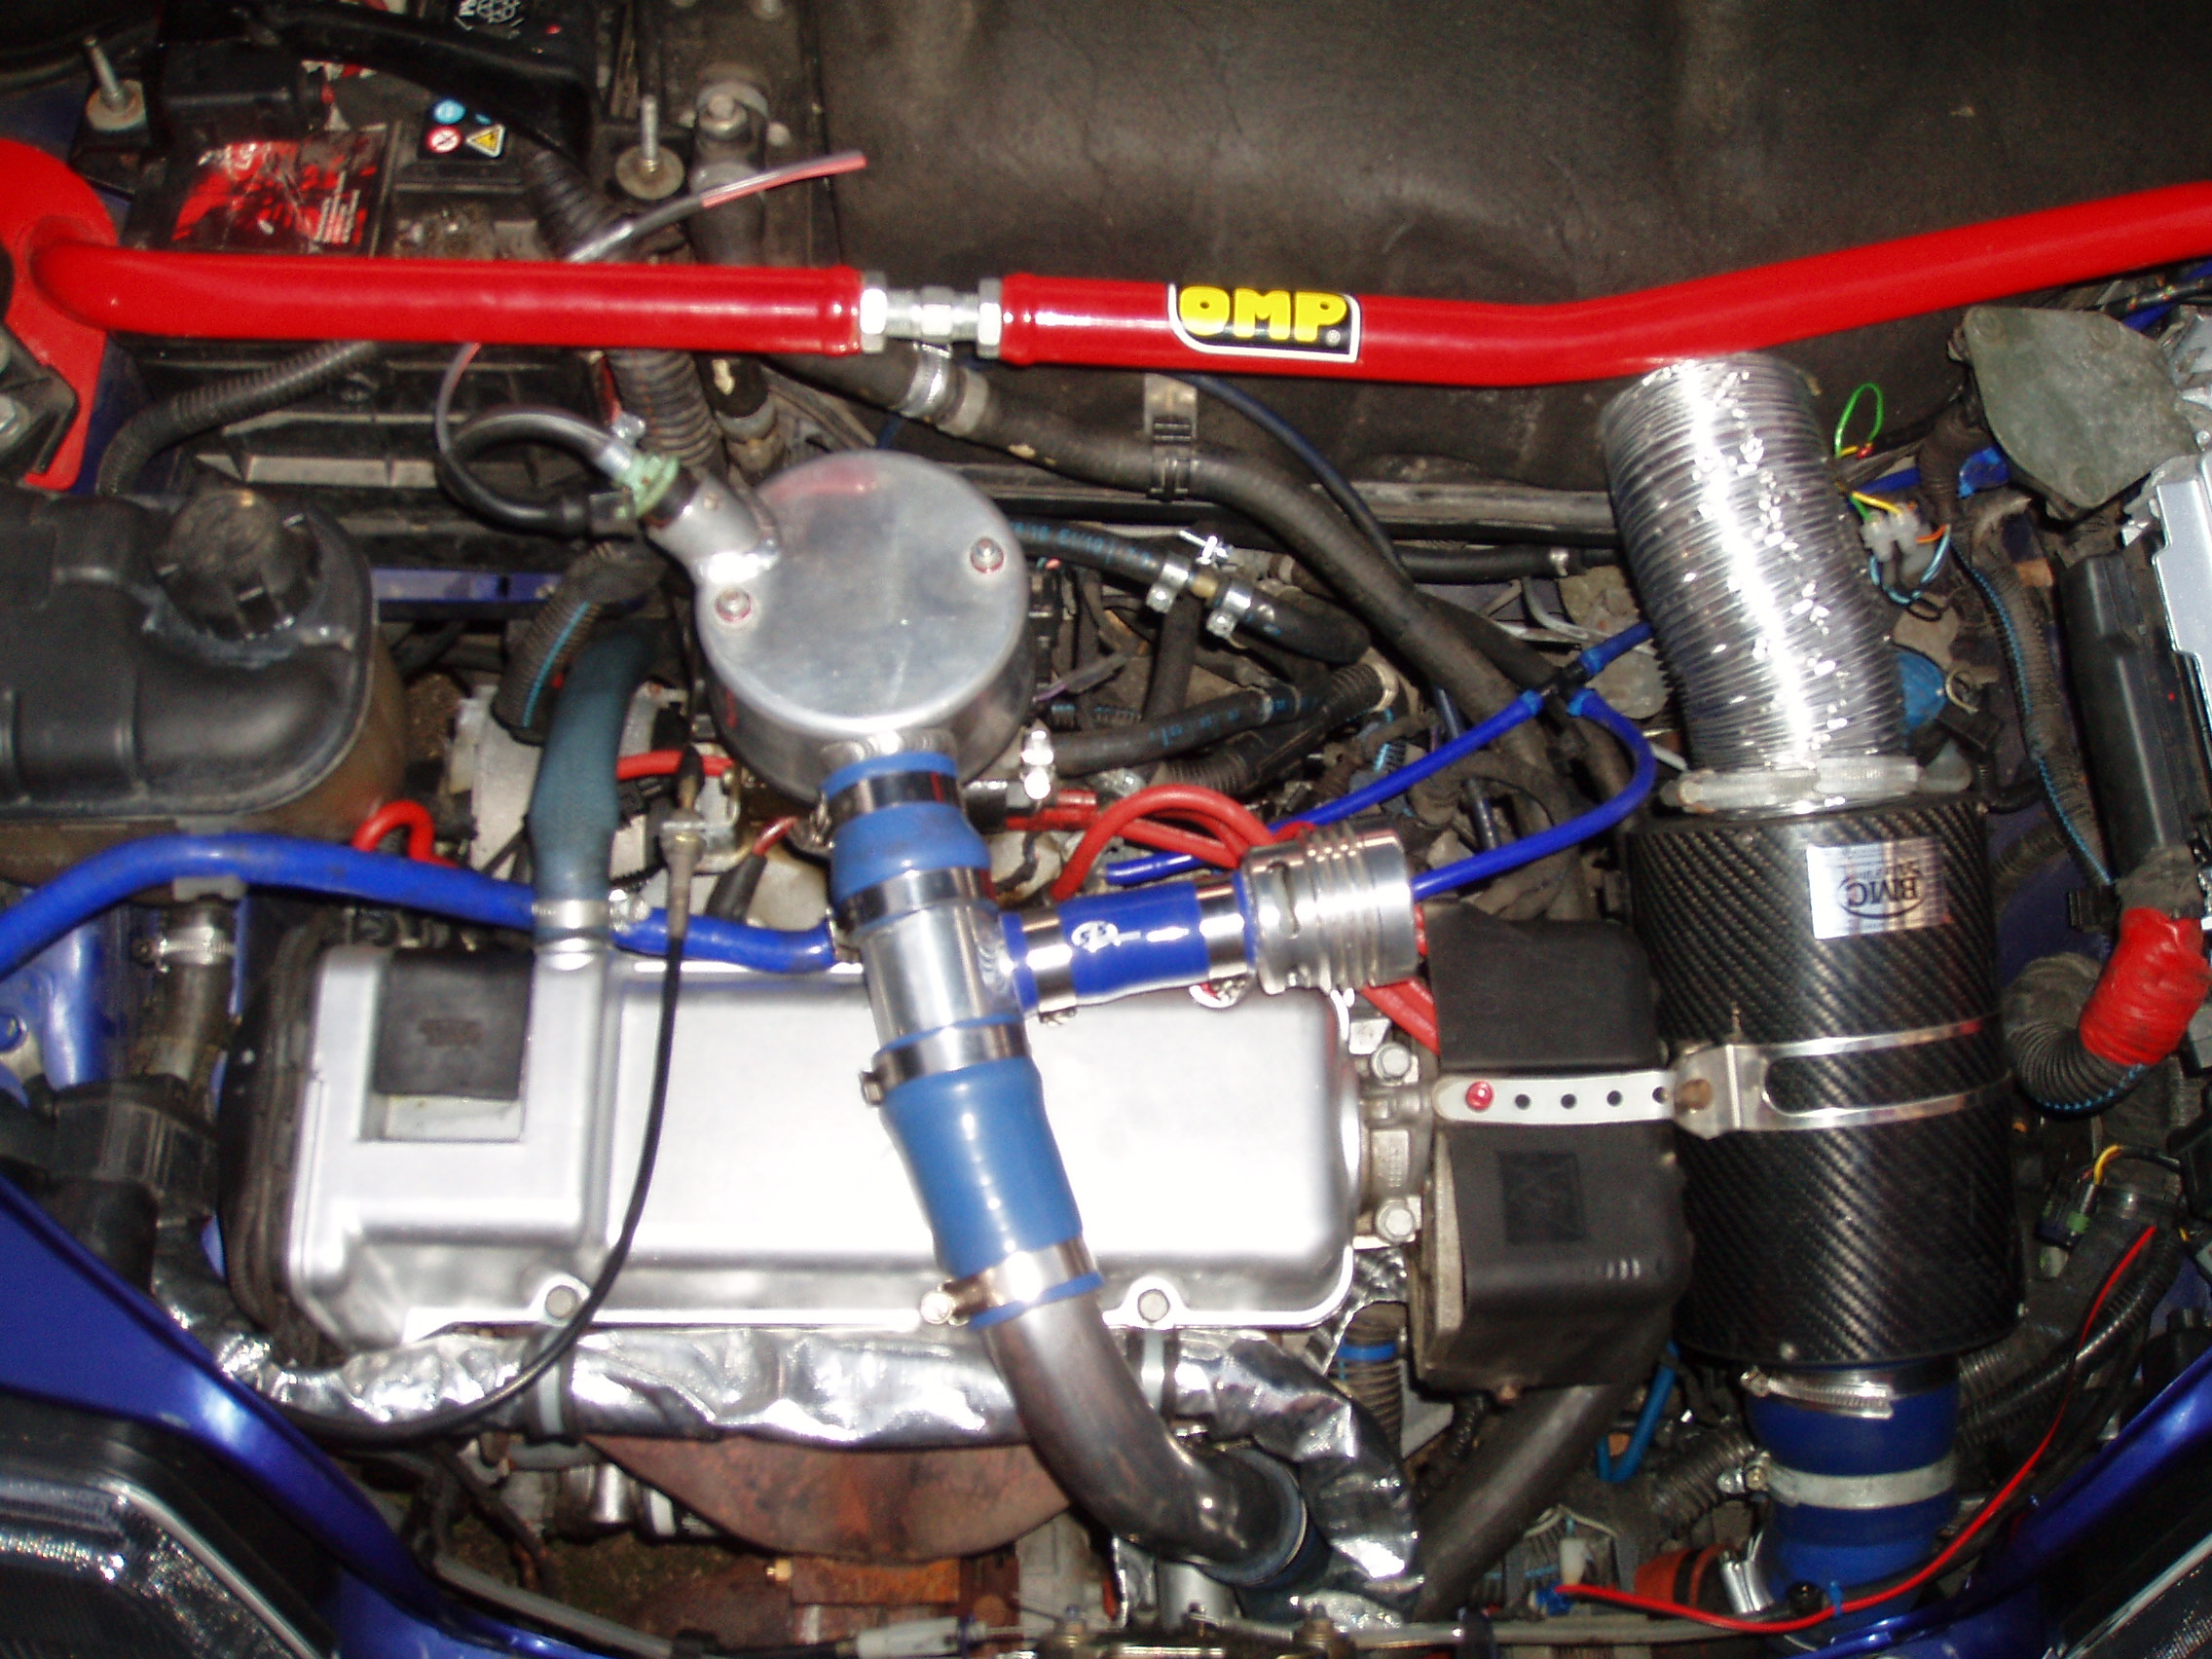 Imola turbo engine